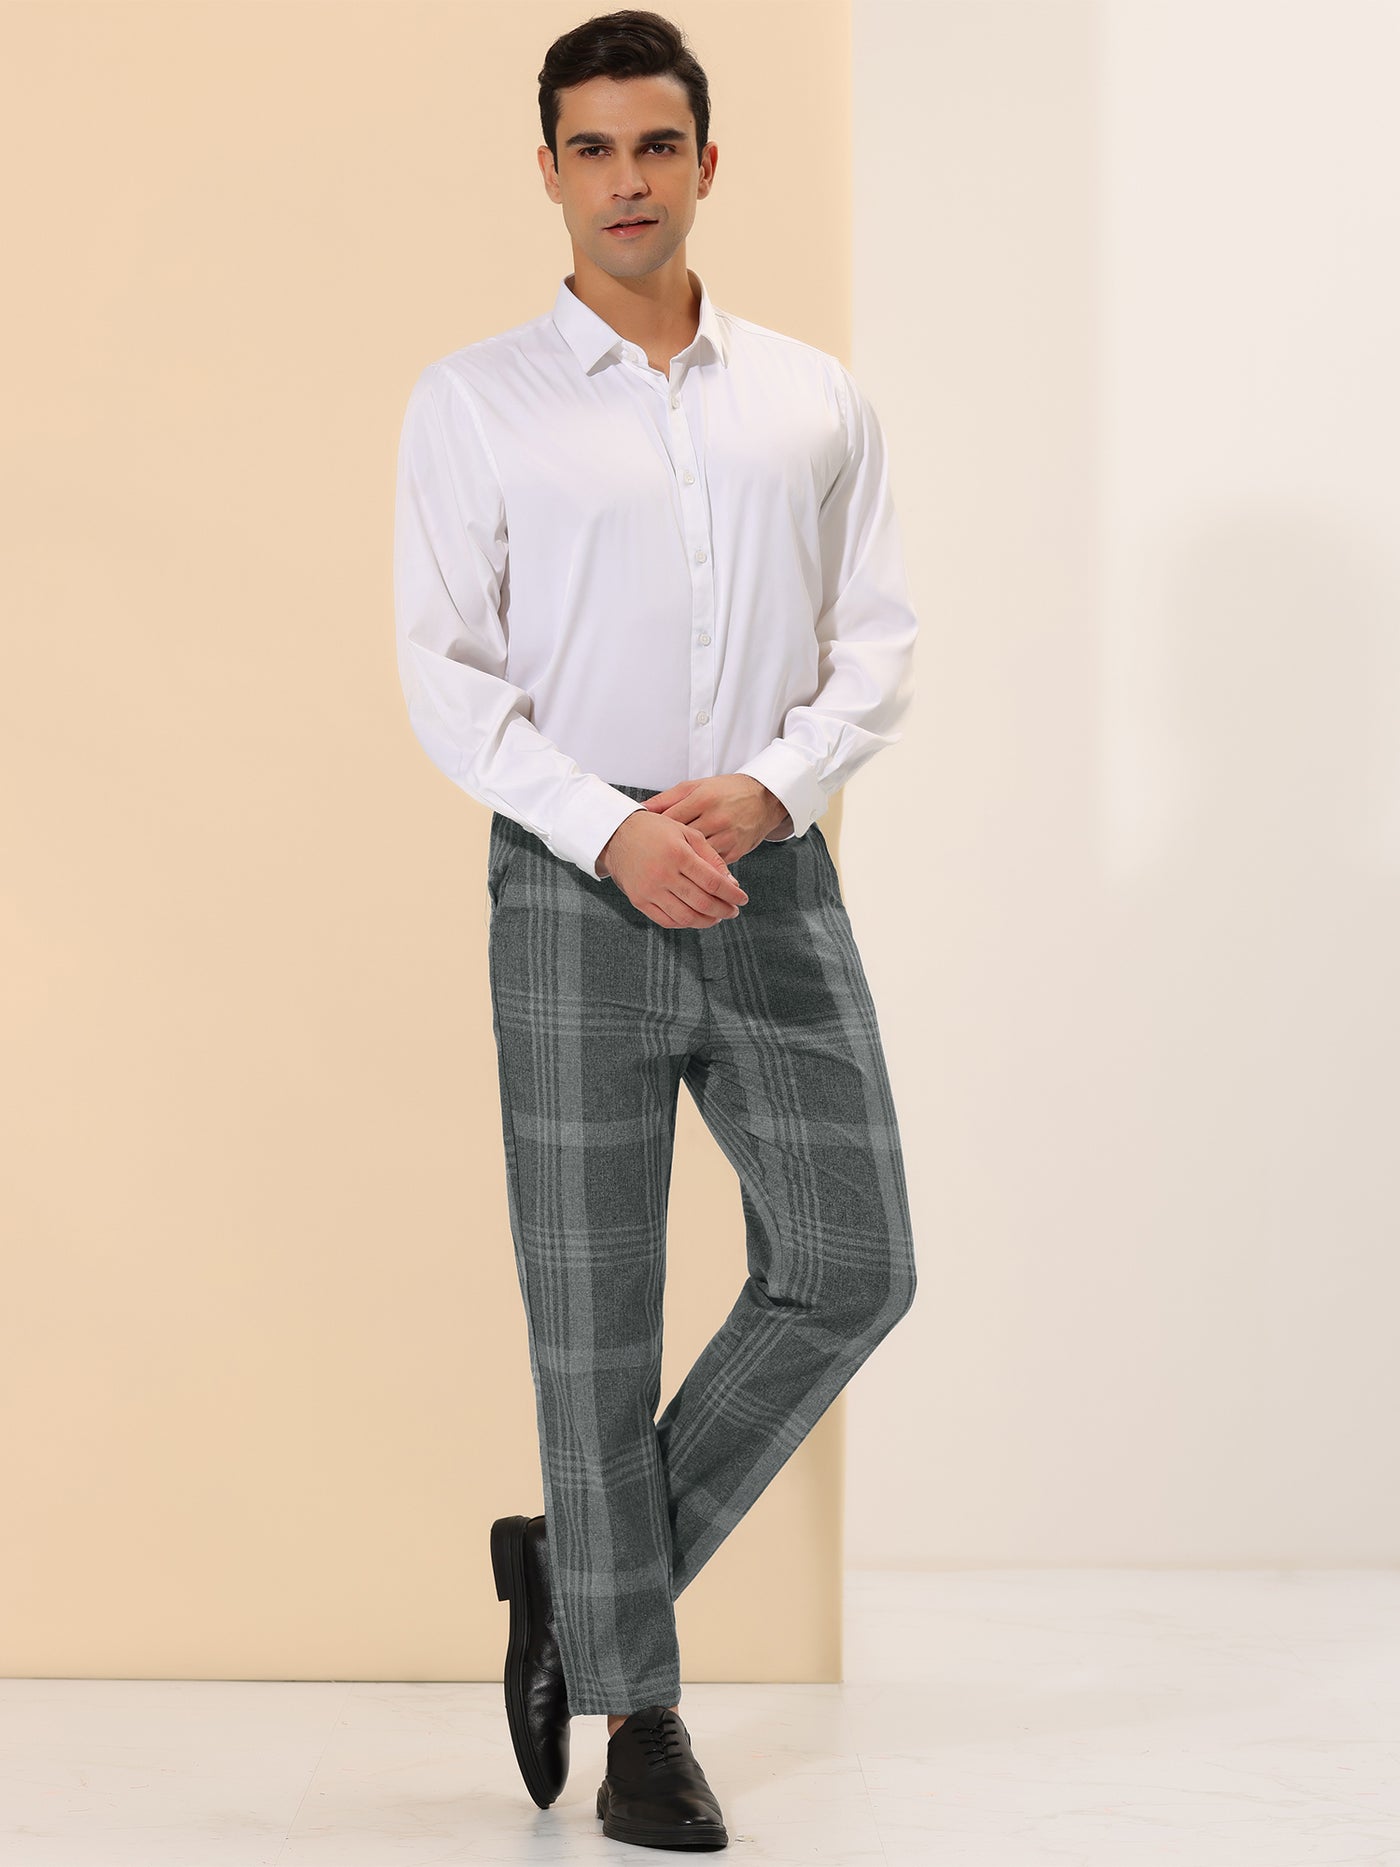 Bublédon Men's Business Plaid Printed Slim Fit Flat Front Checked Dress Pants